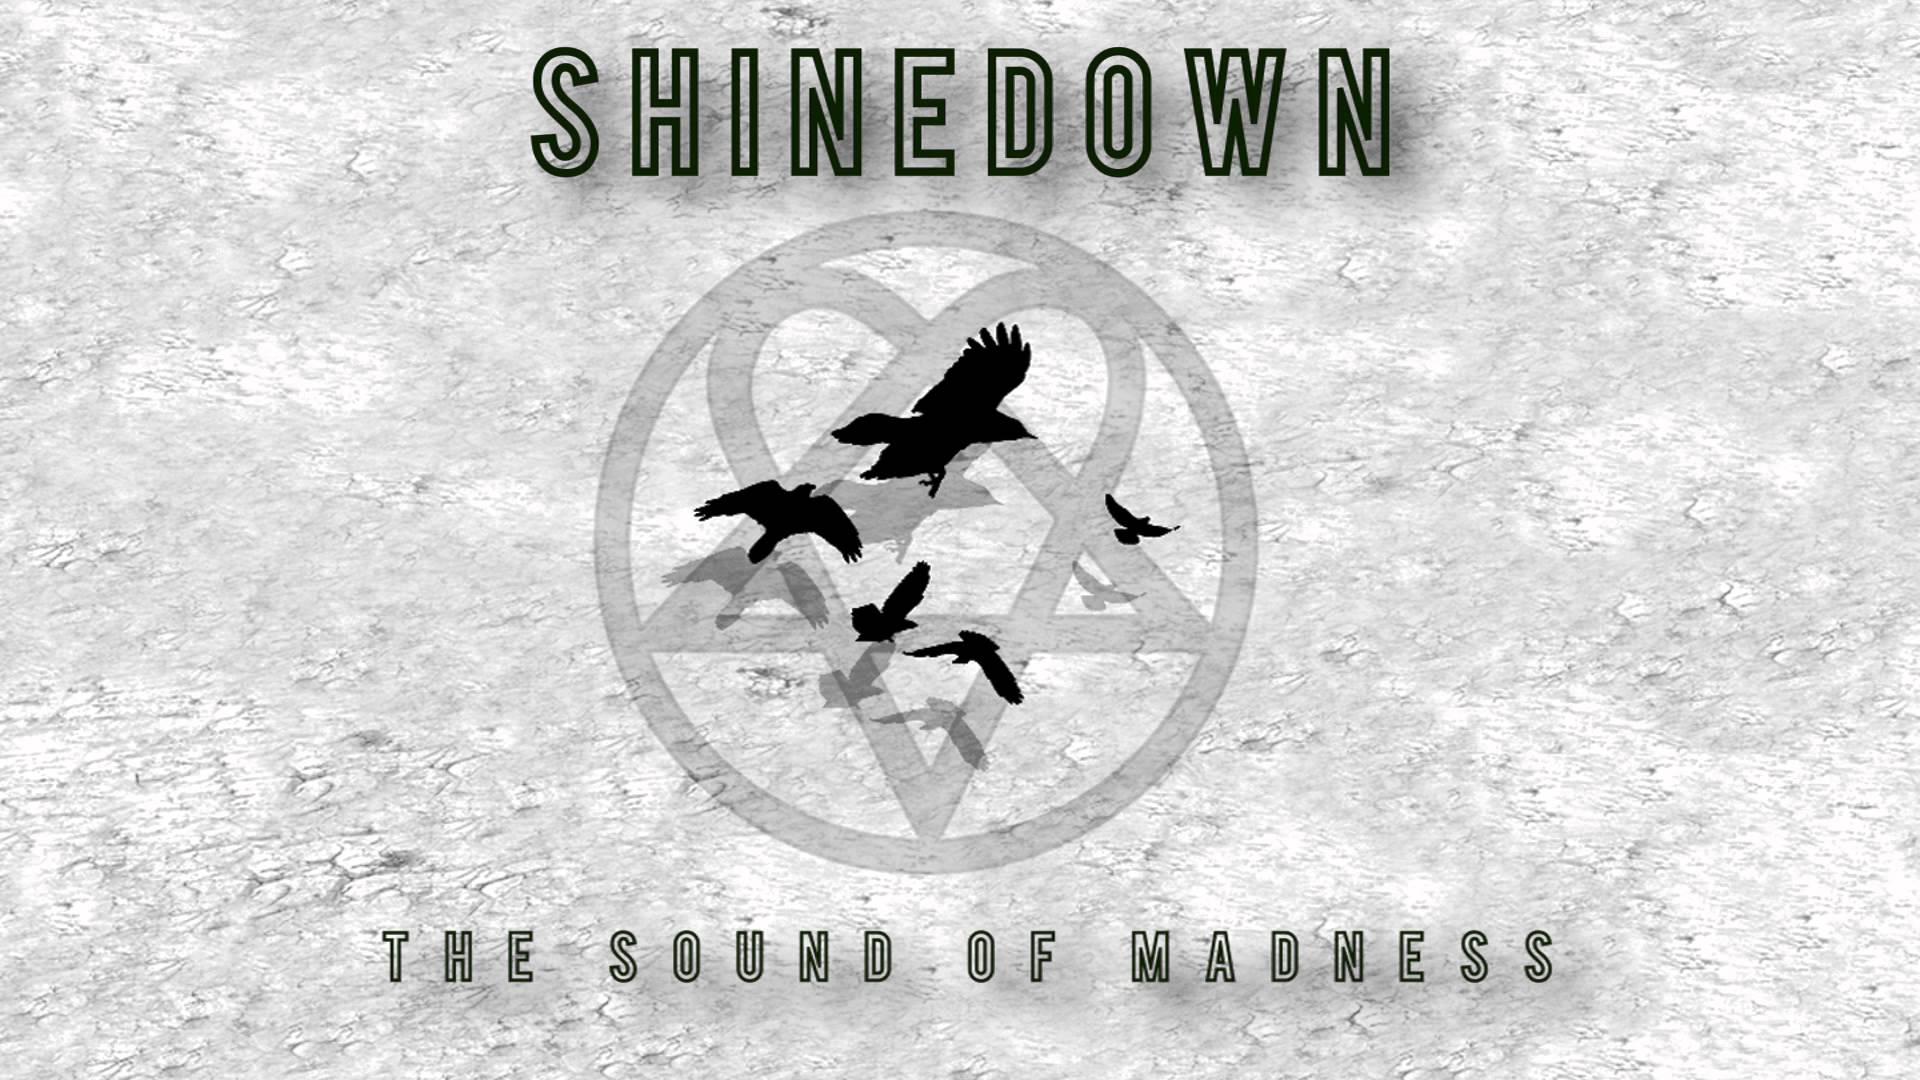 Shinedown - Second Chance Full HD 1080p w / Lyrics - YouTube